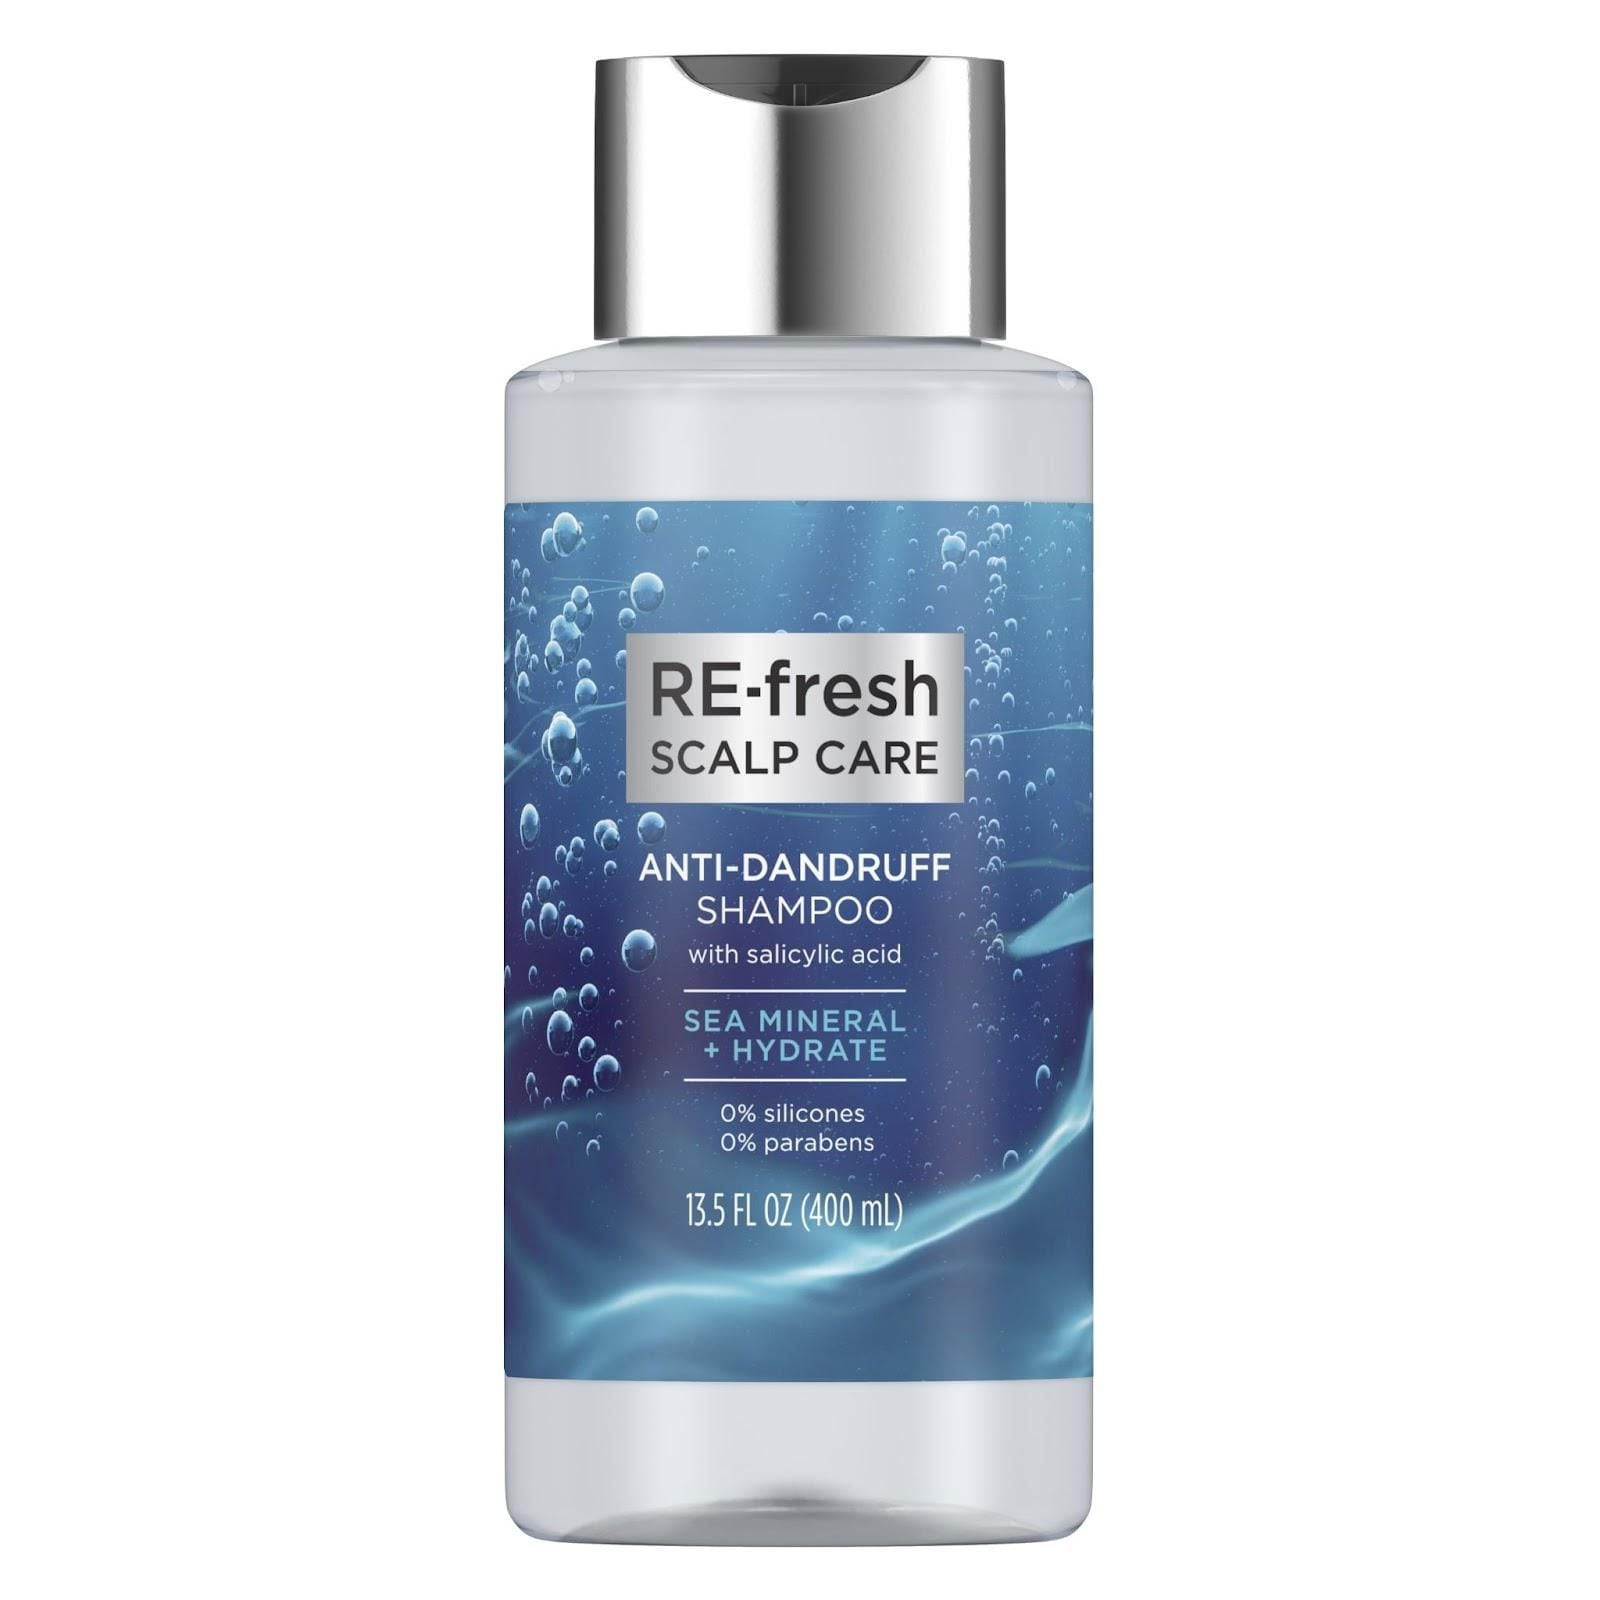 (RE-fresh Scalp Care) | Anti-Dandruff Shampoo.